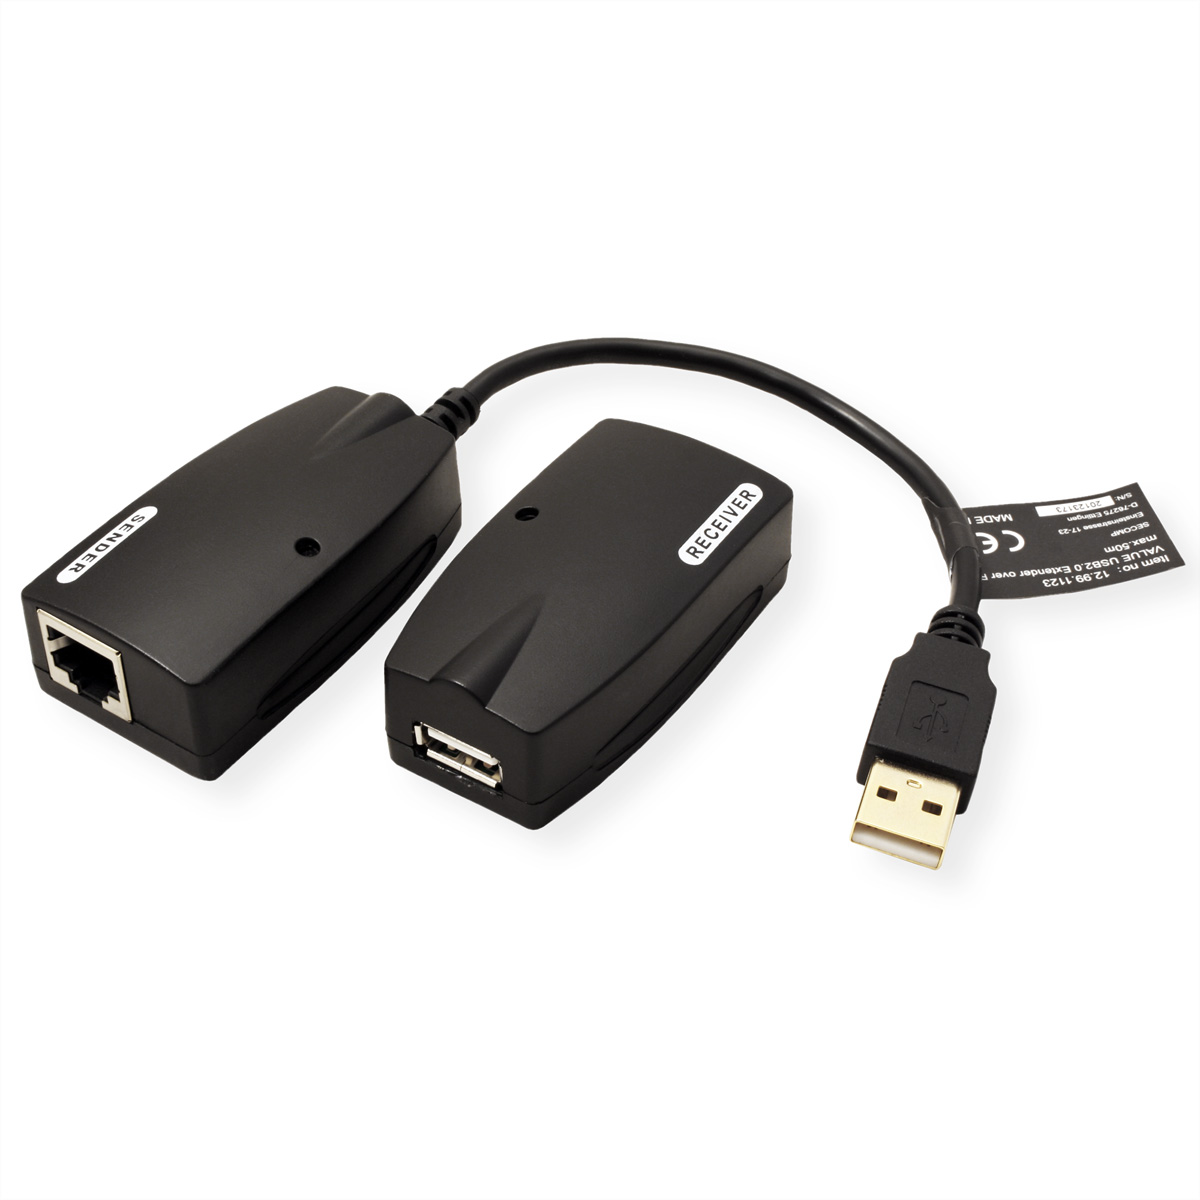 über 2.0 Verlängerung USB USB-Verlängerung max. RJ45, 50m VALUE